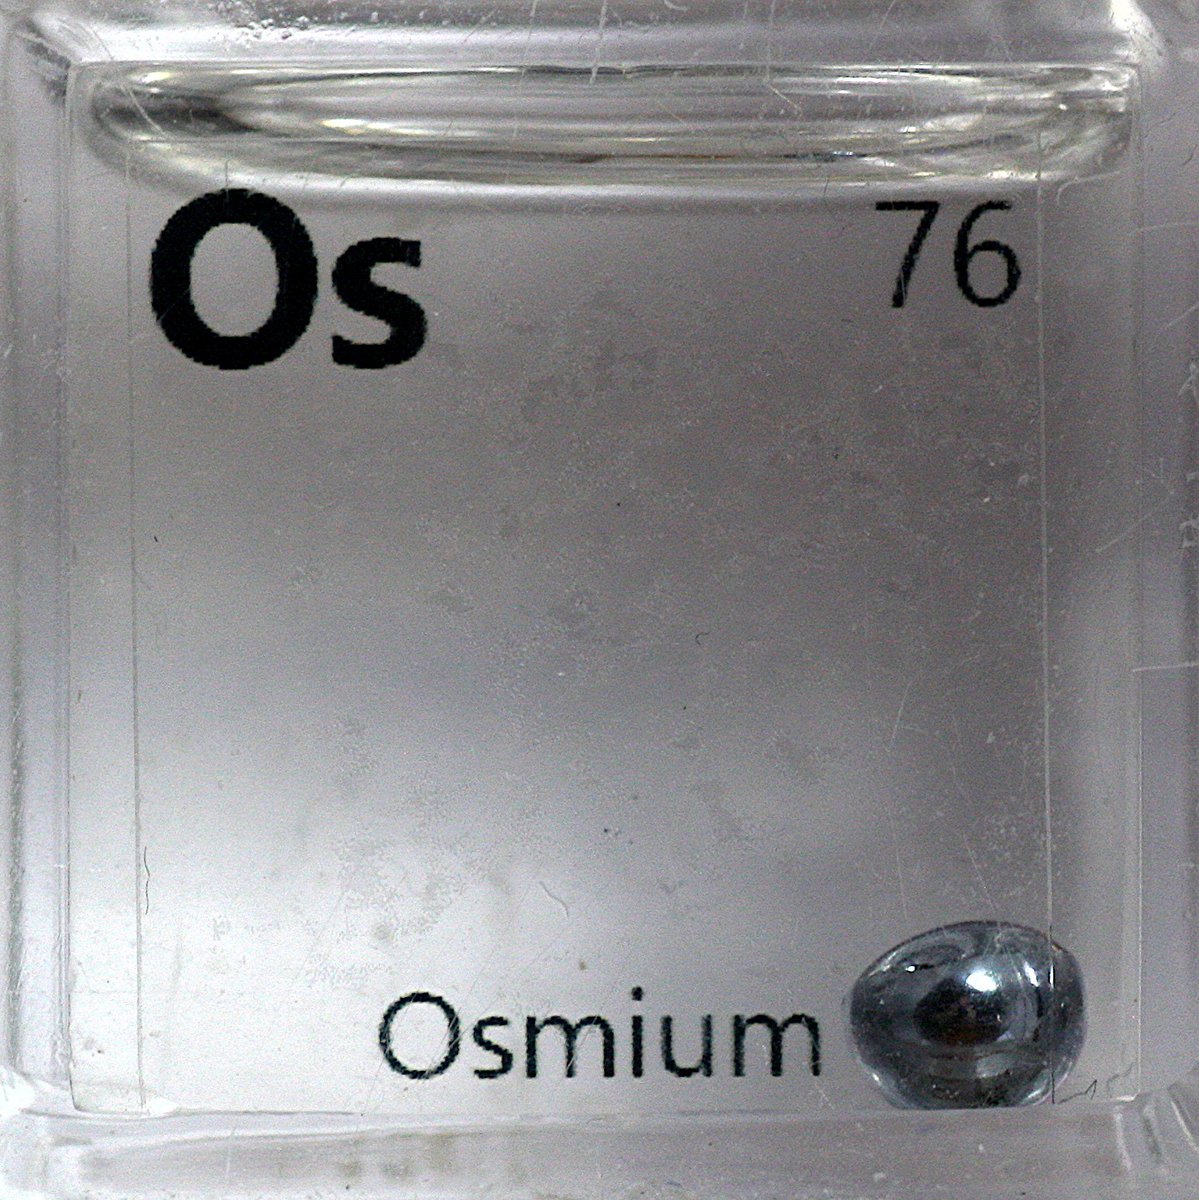 Osmium  #elementphotos. Osmium metal has a distinctive grey-blue sheen, and is the densest stable element. Pen nib is an alloy of osmium and iridium known as 'osmiridium'.